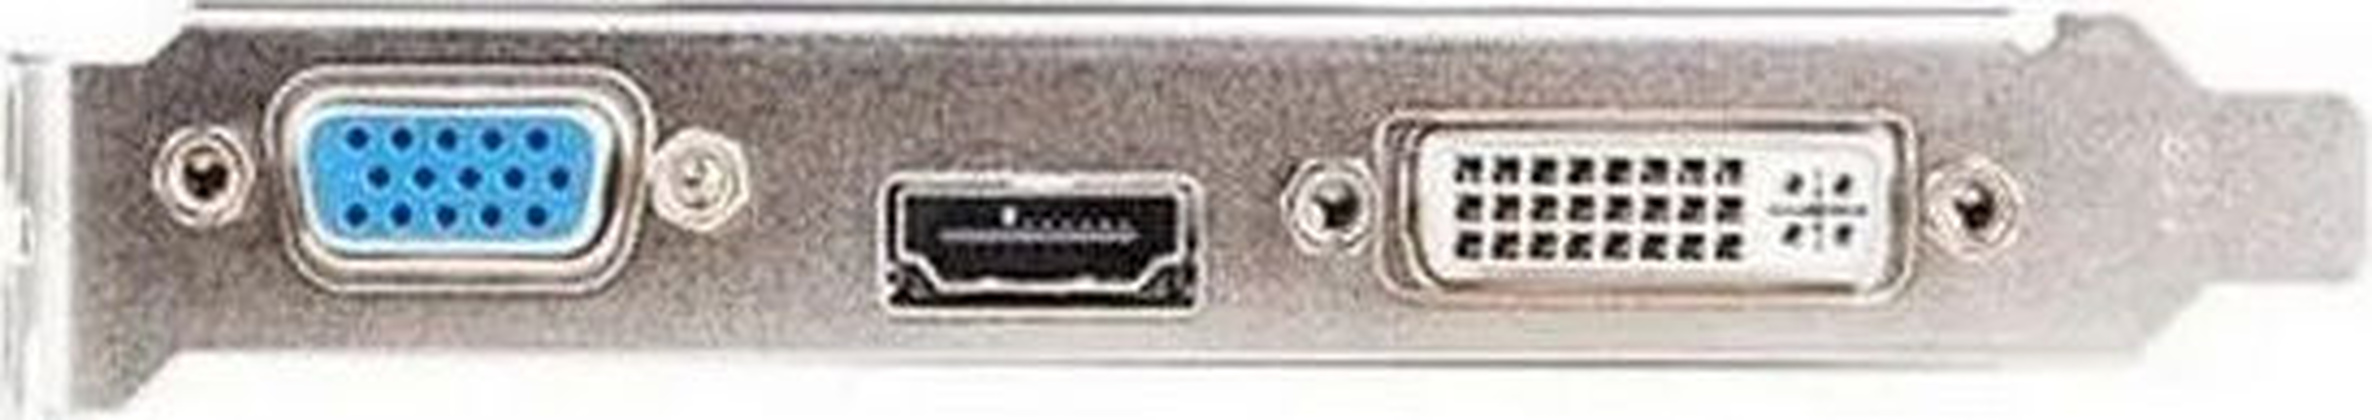 Видеокарта GT210 "Sinotex" 512MB DDR3 (64bit) NF21N5123F; AC